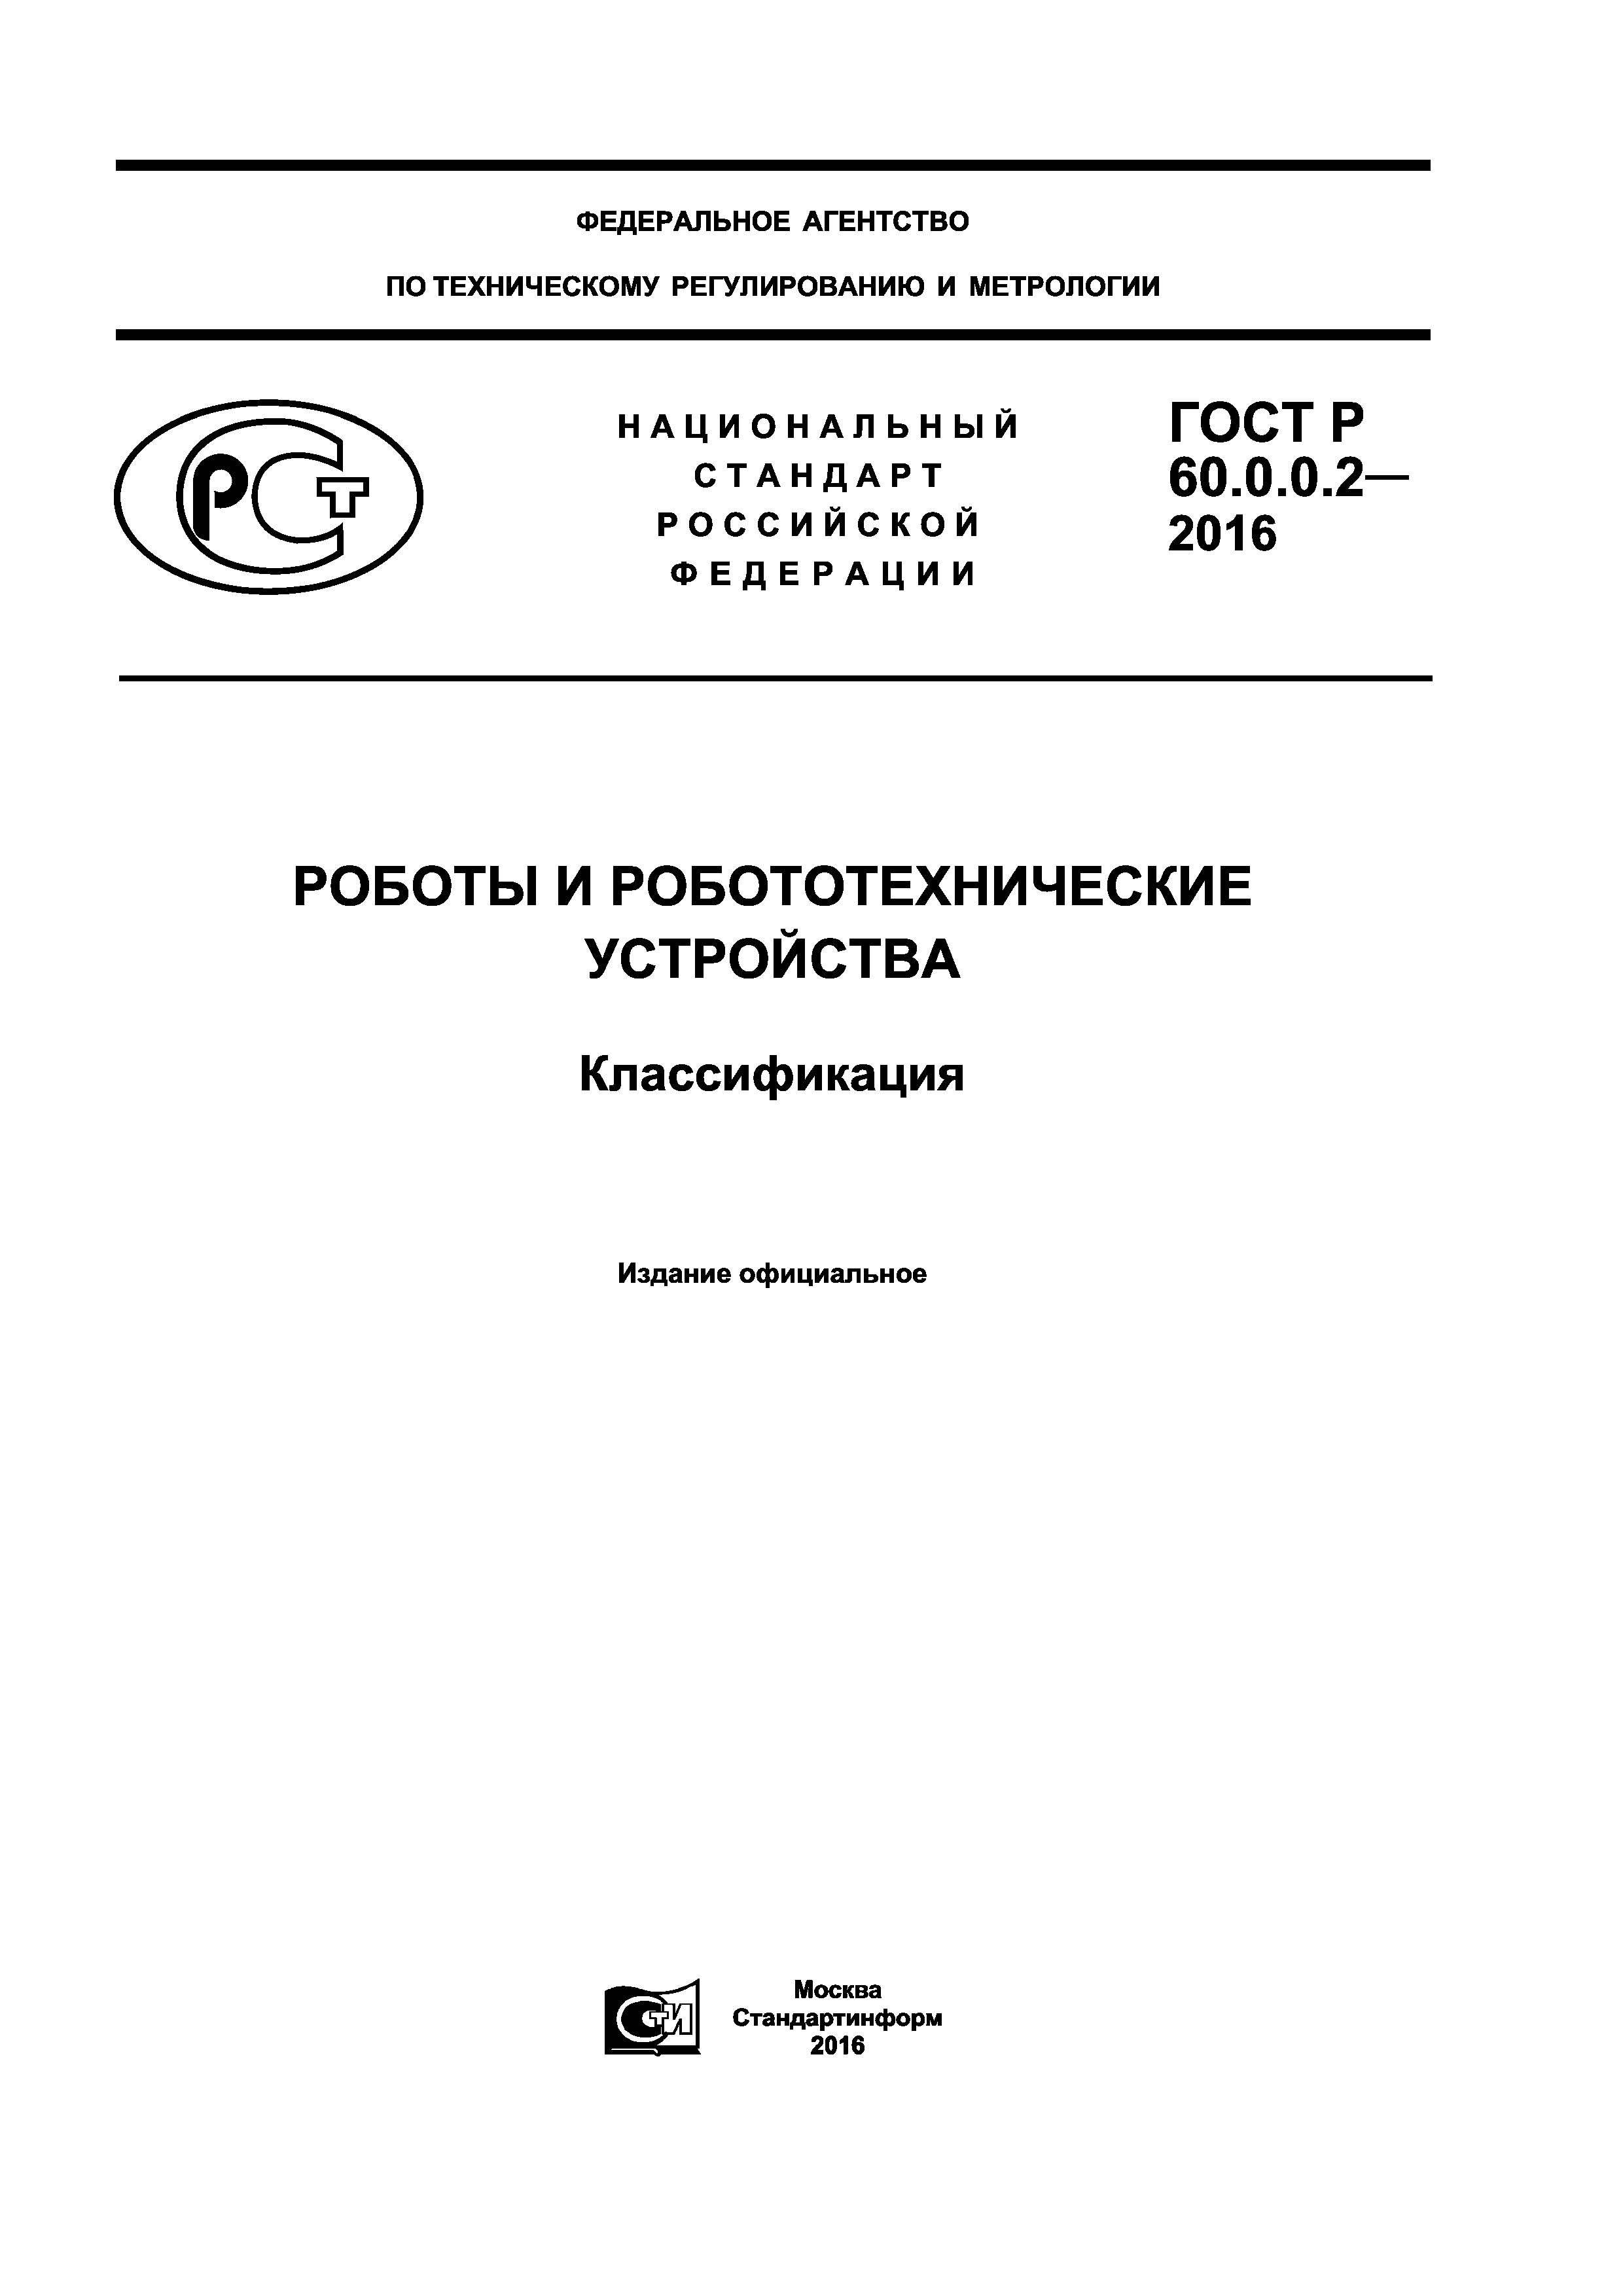 ГОСТ Р 60.0.0.2-2016